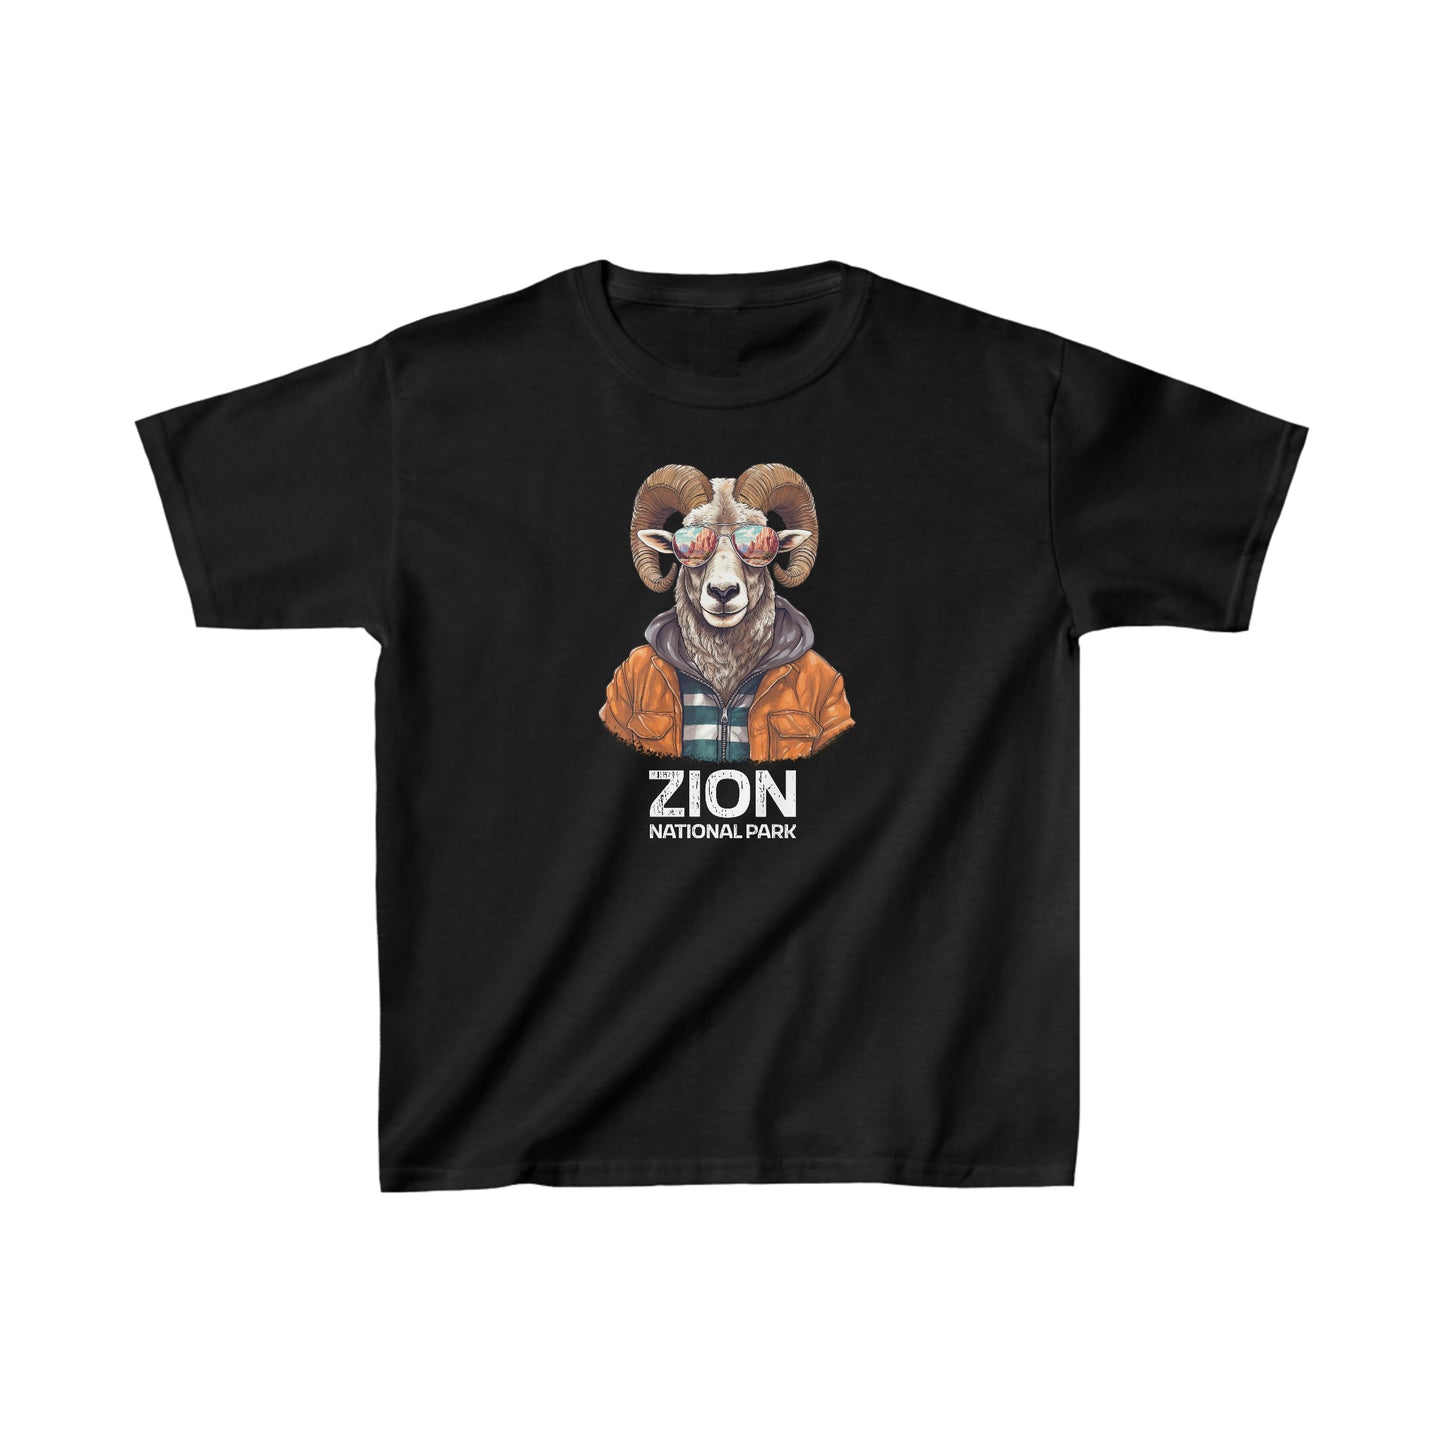 Zion National Park Child T-Shirt - Cool Bighorn Sheep